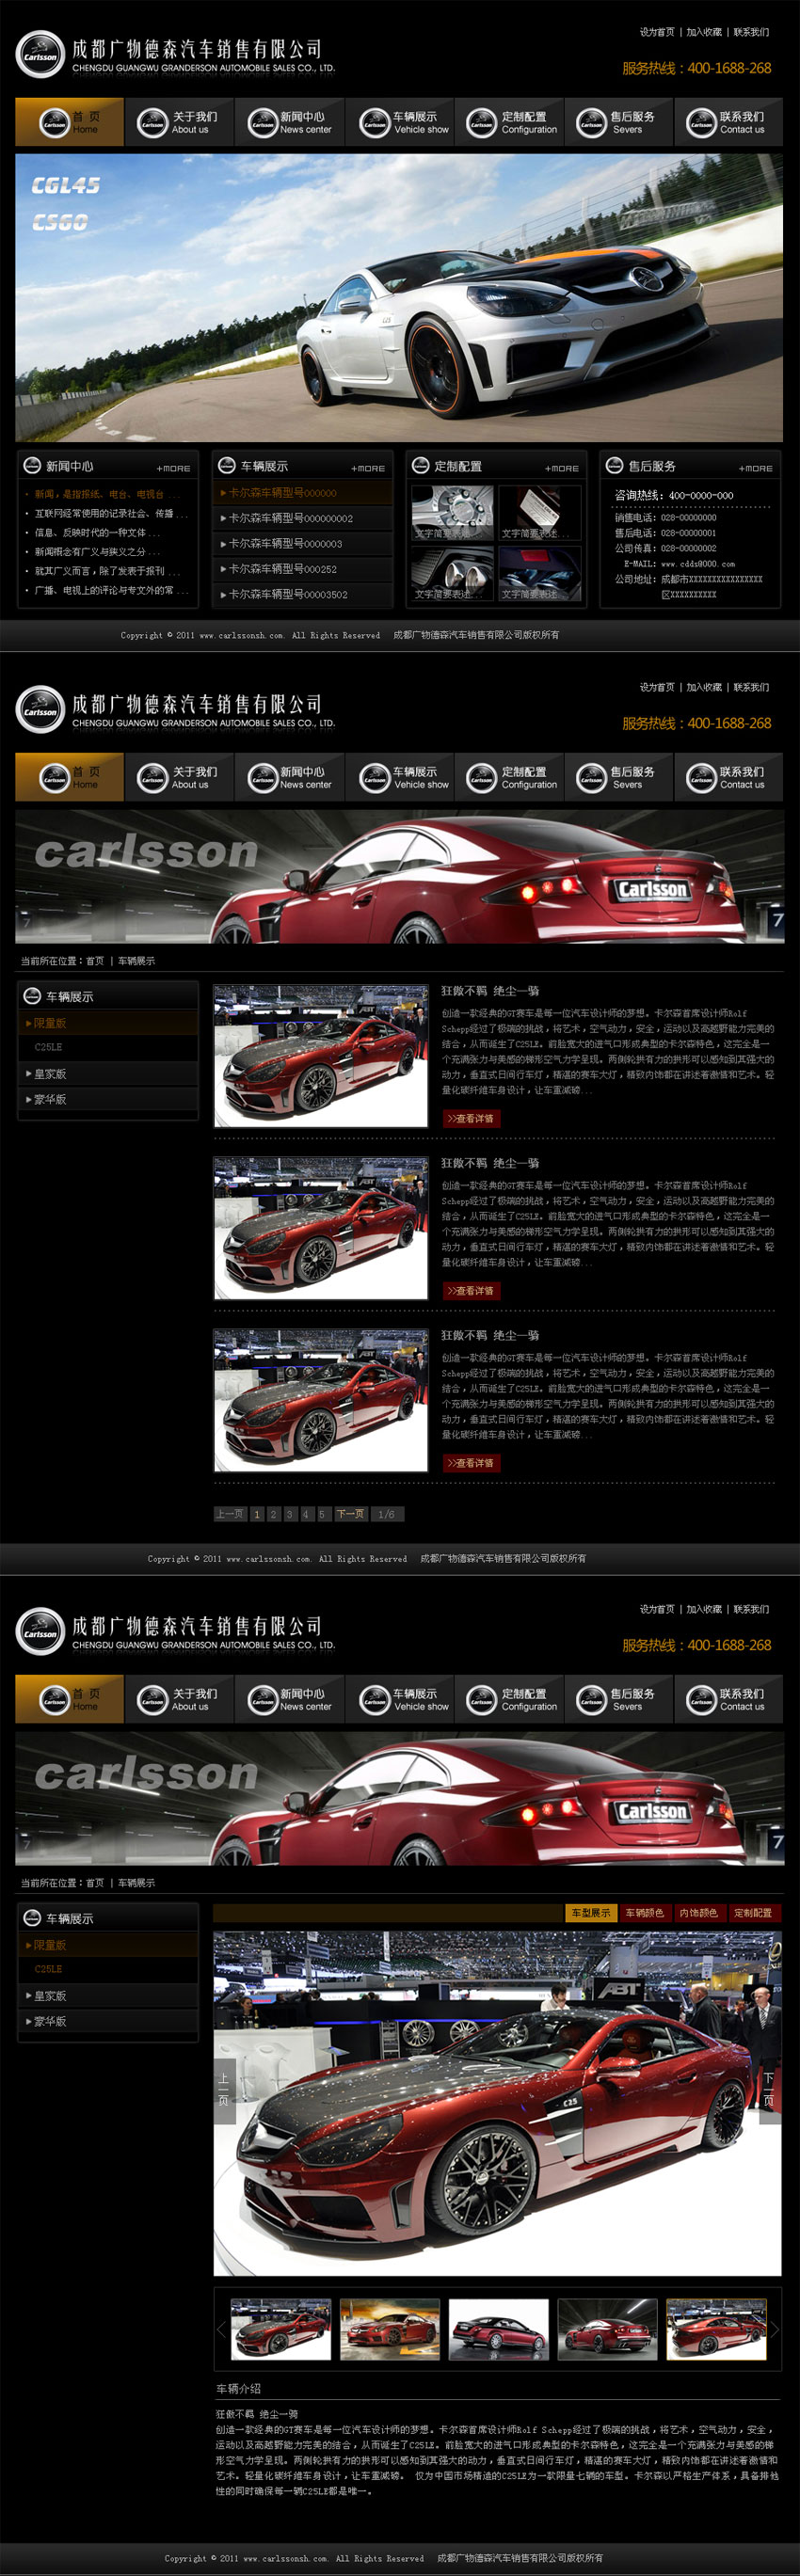 4S店汽车销售公司网站模板psd分层素材下载